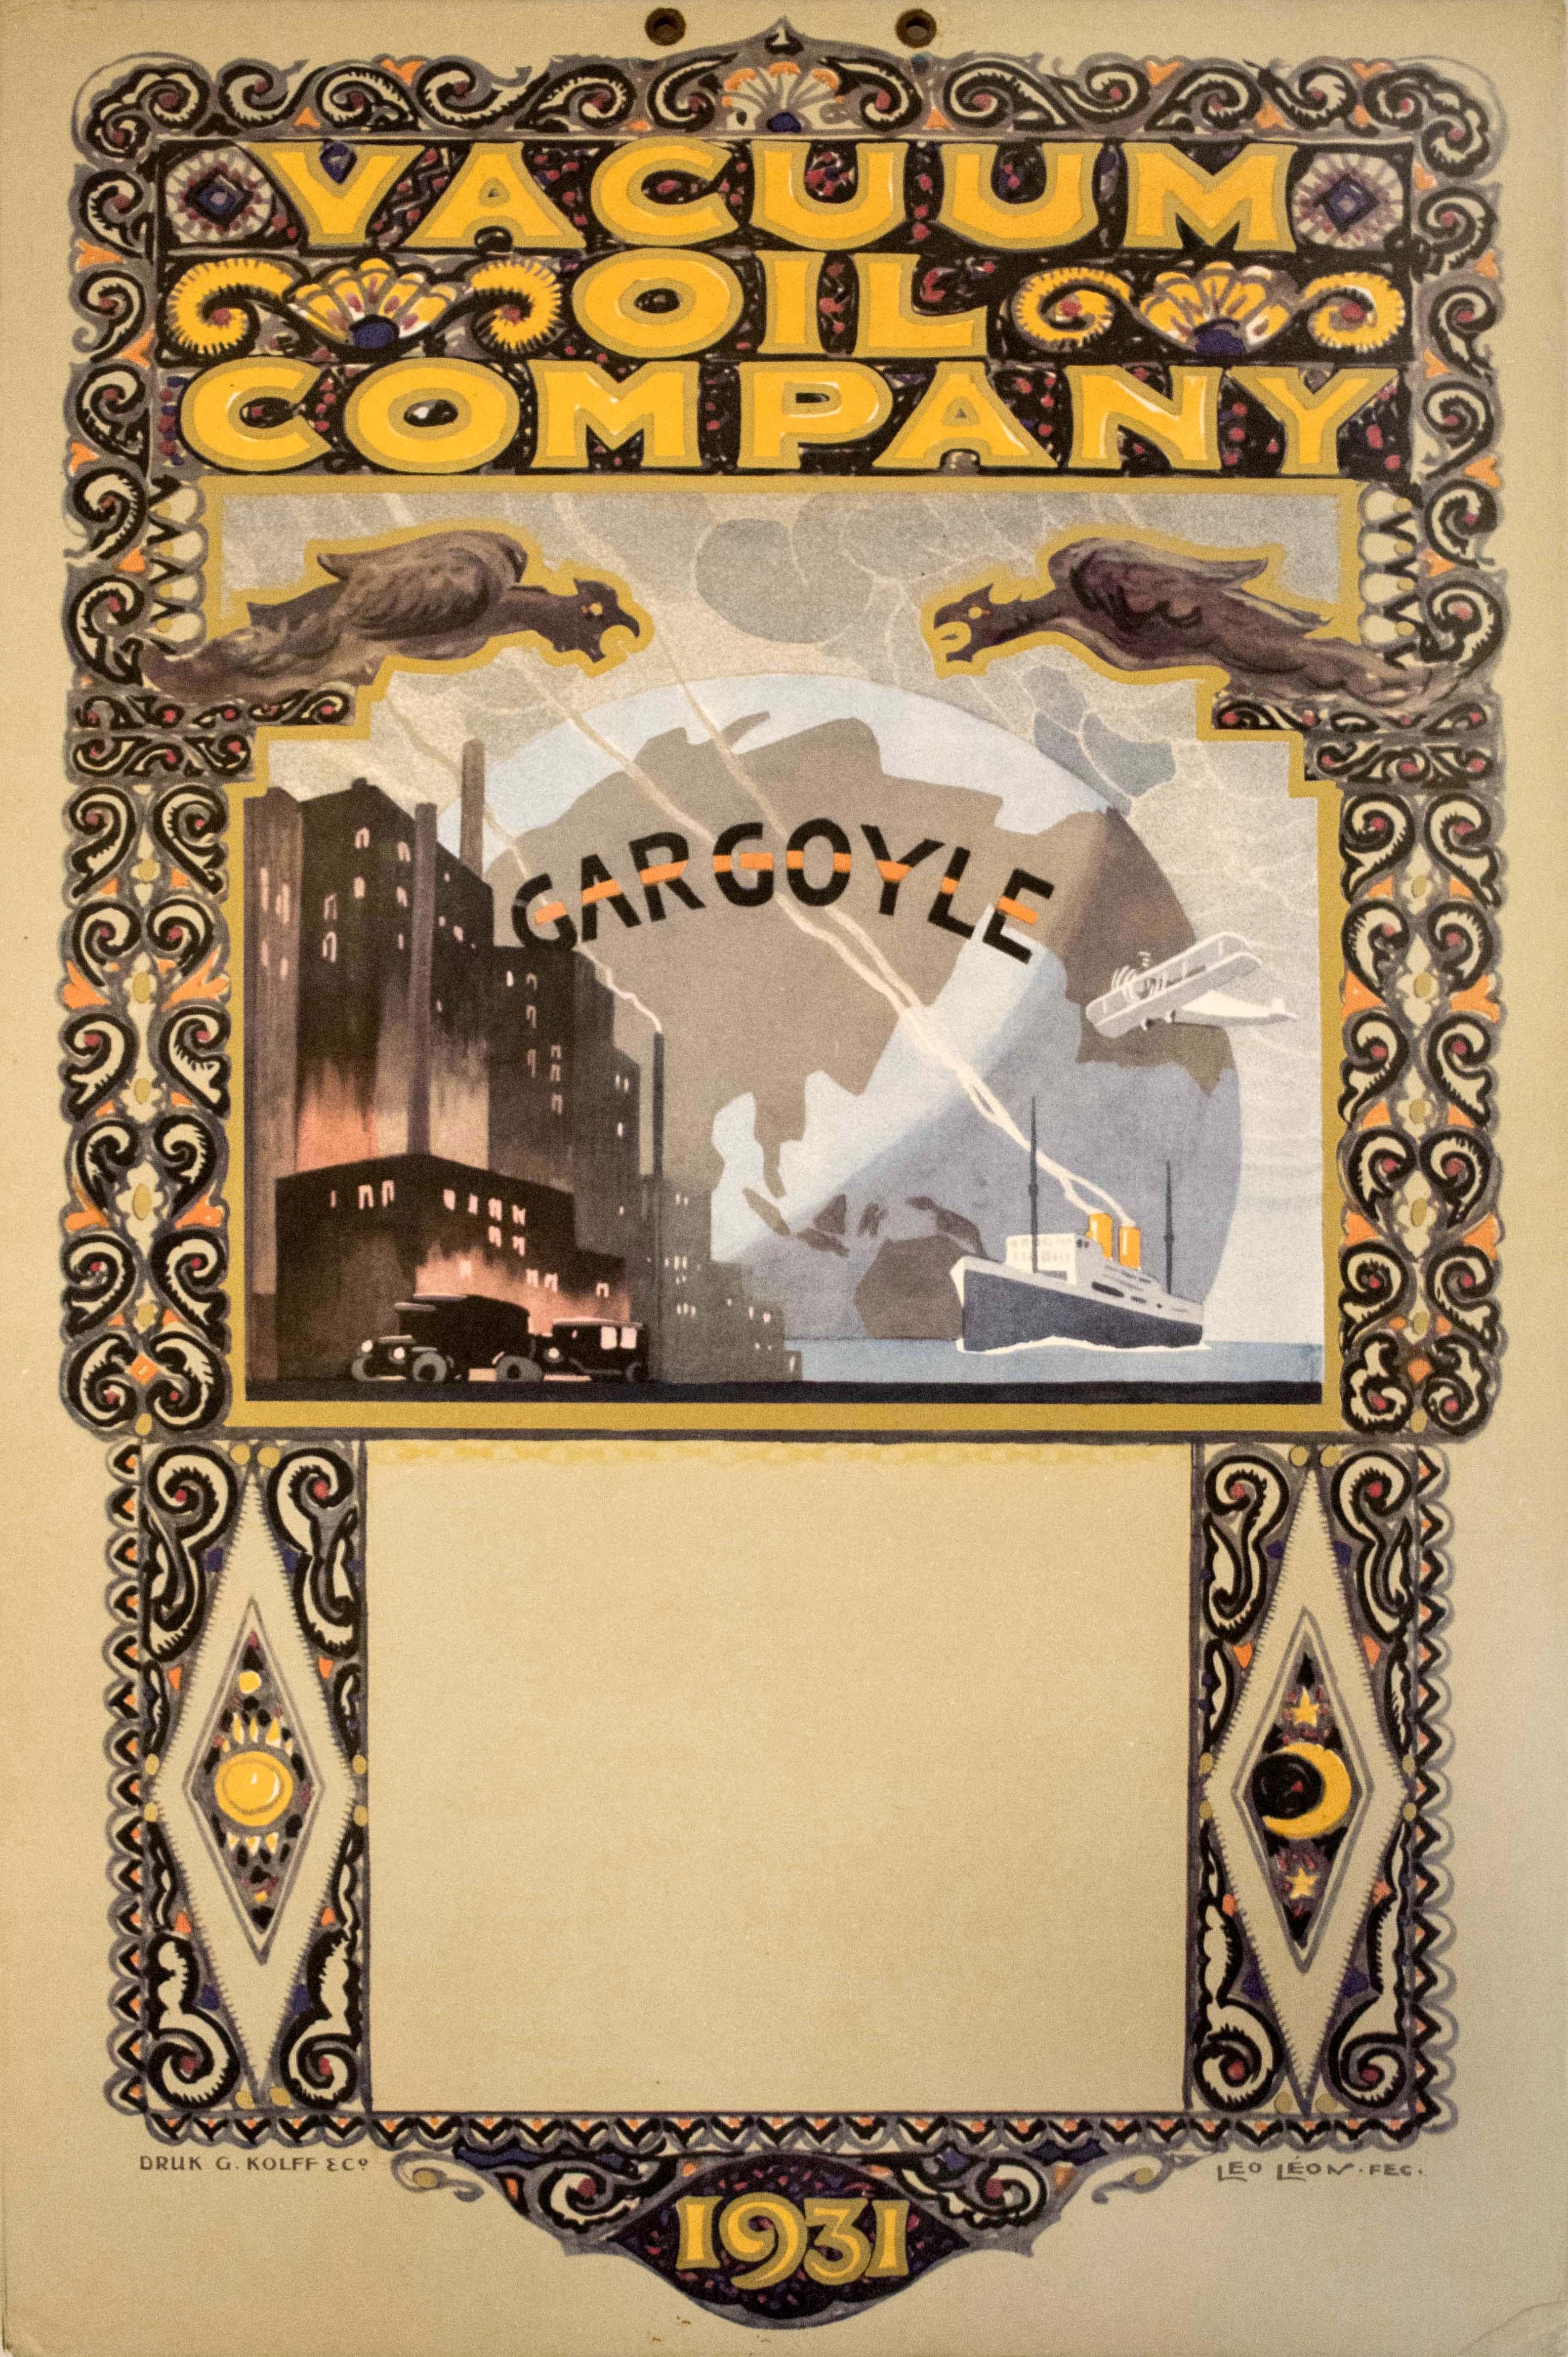 Leo Leon Print – Original-Vintage-Poster, Vacuum Oil Company, Gargoyle 1931, klassischer Auto, Schiff